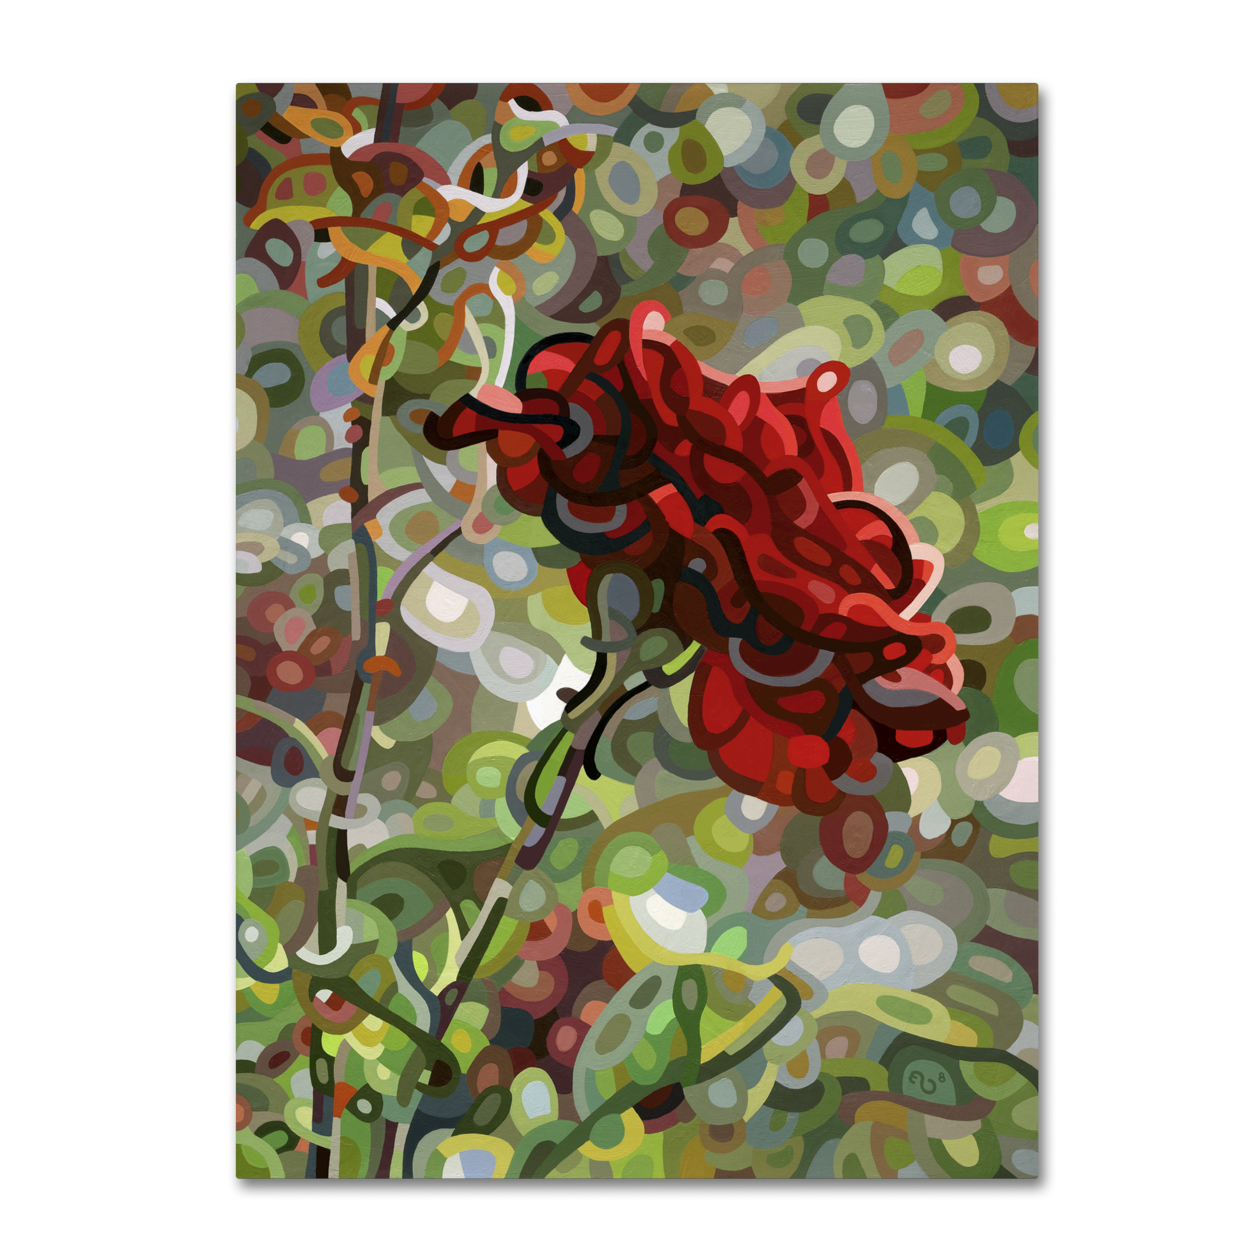 Mandy Budan 'Last Rose Of Summer' Canvas Wall Art 35 X 47 Inches